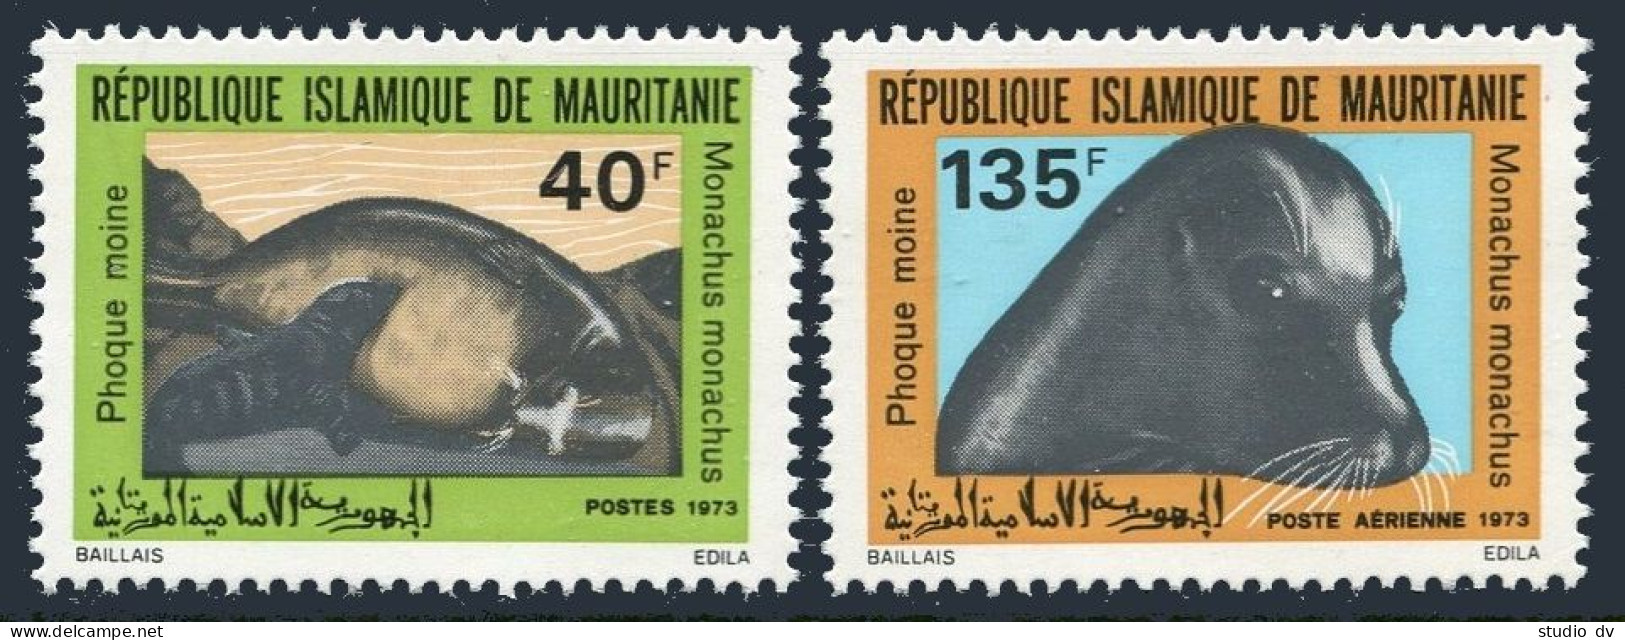 Mauritania 300,C130,MNH.Michel 450-451. Mediterranean Monk Seal,pup.1973. - Mauritania (1960-...)